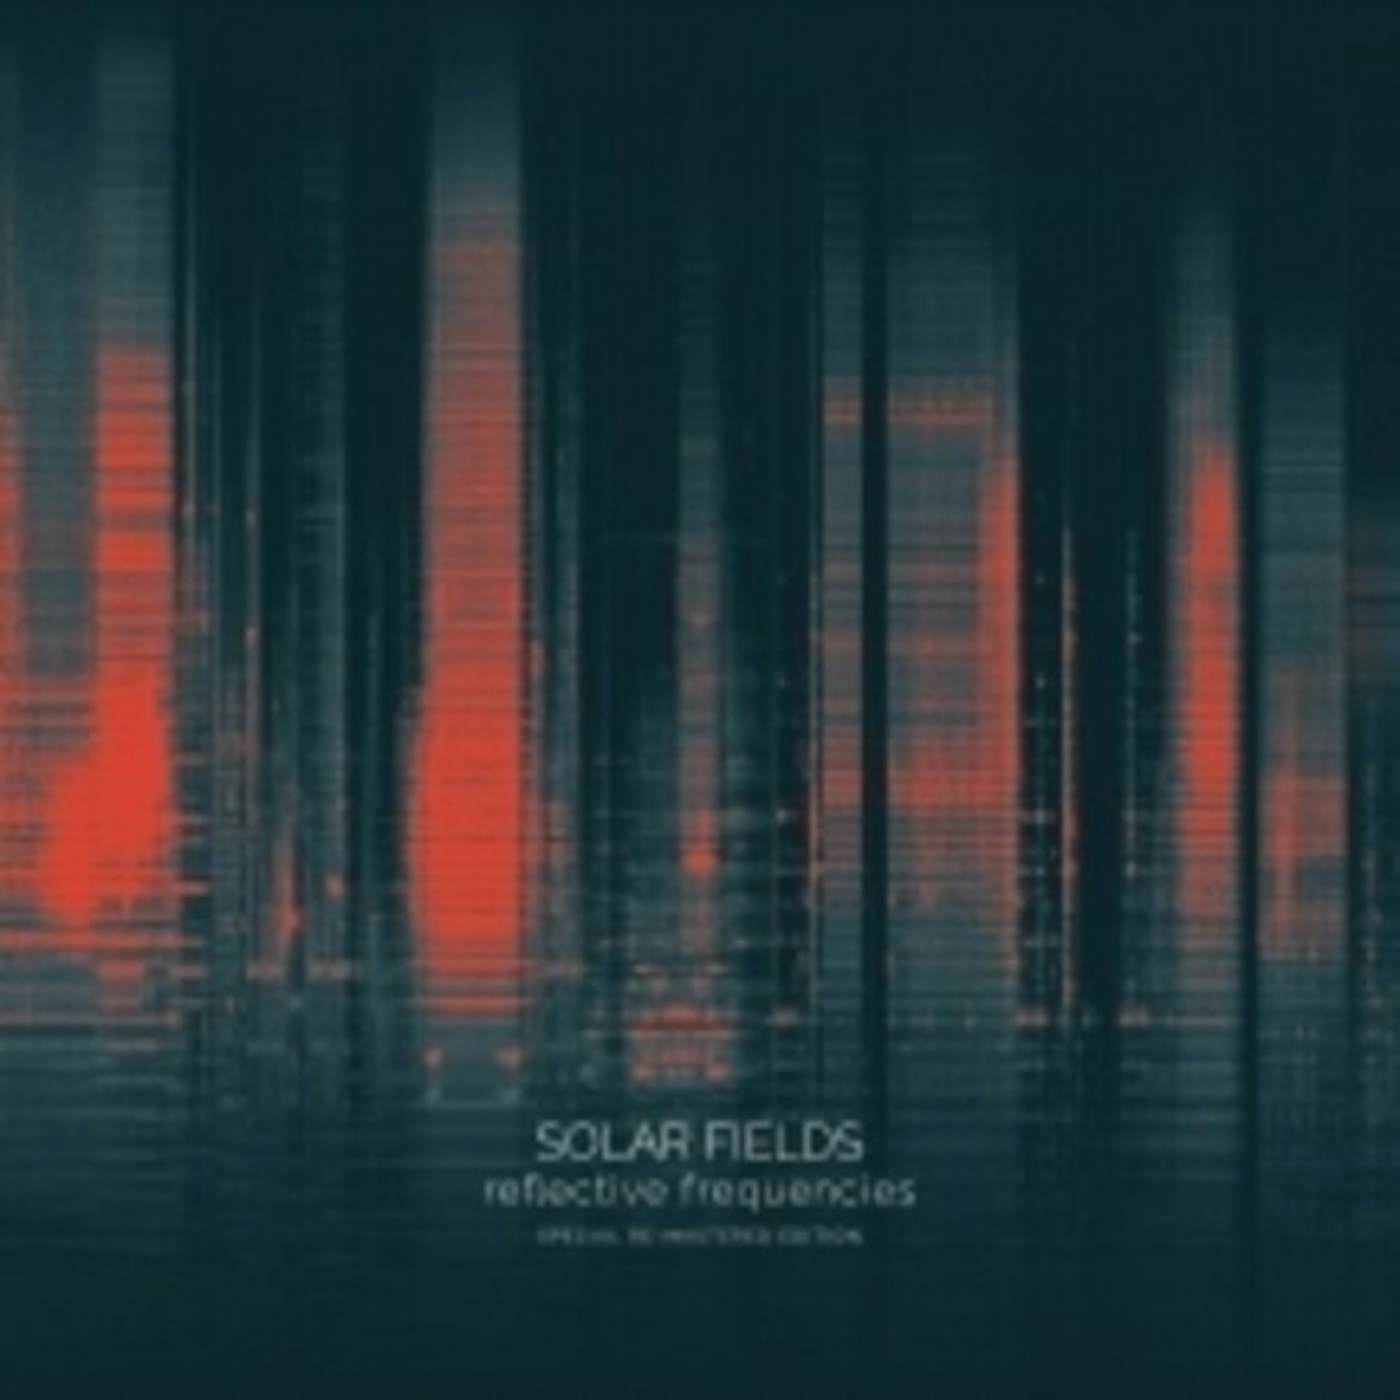 Solar Fields Reflective Frequencies Vinyl Record